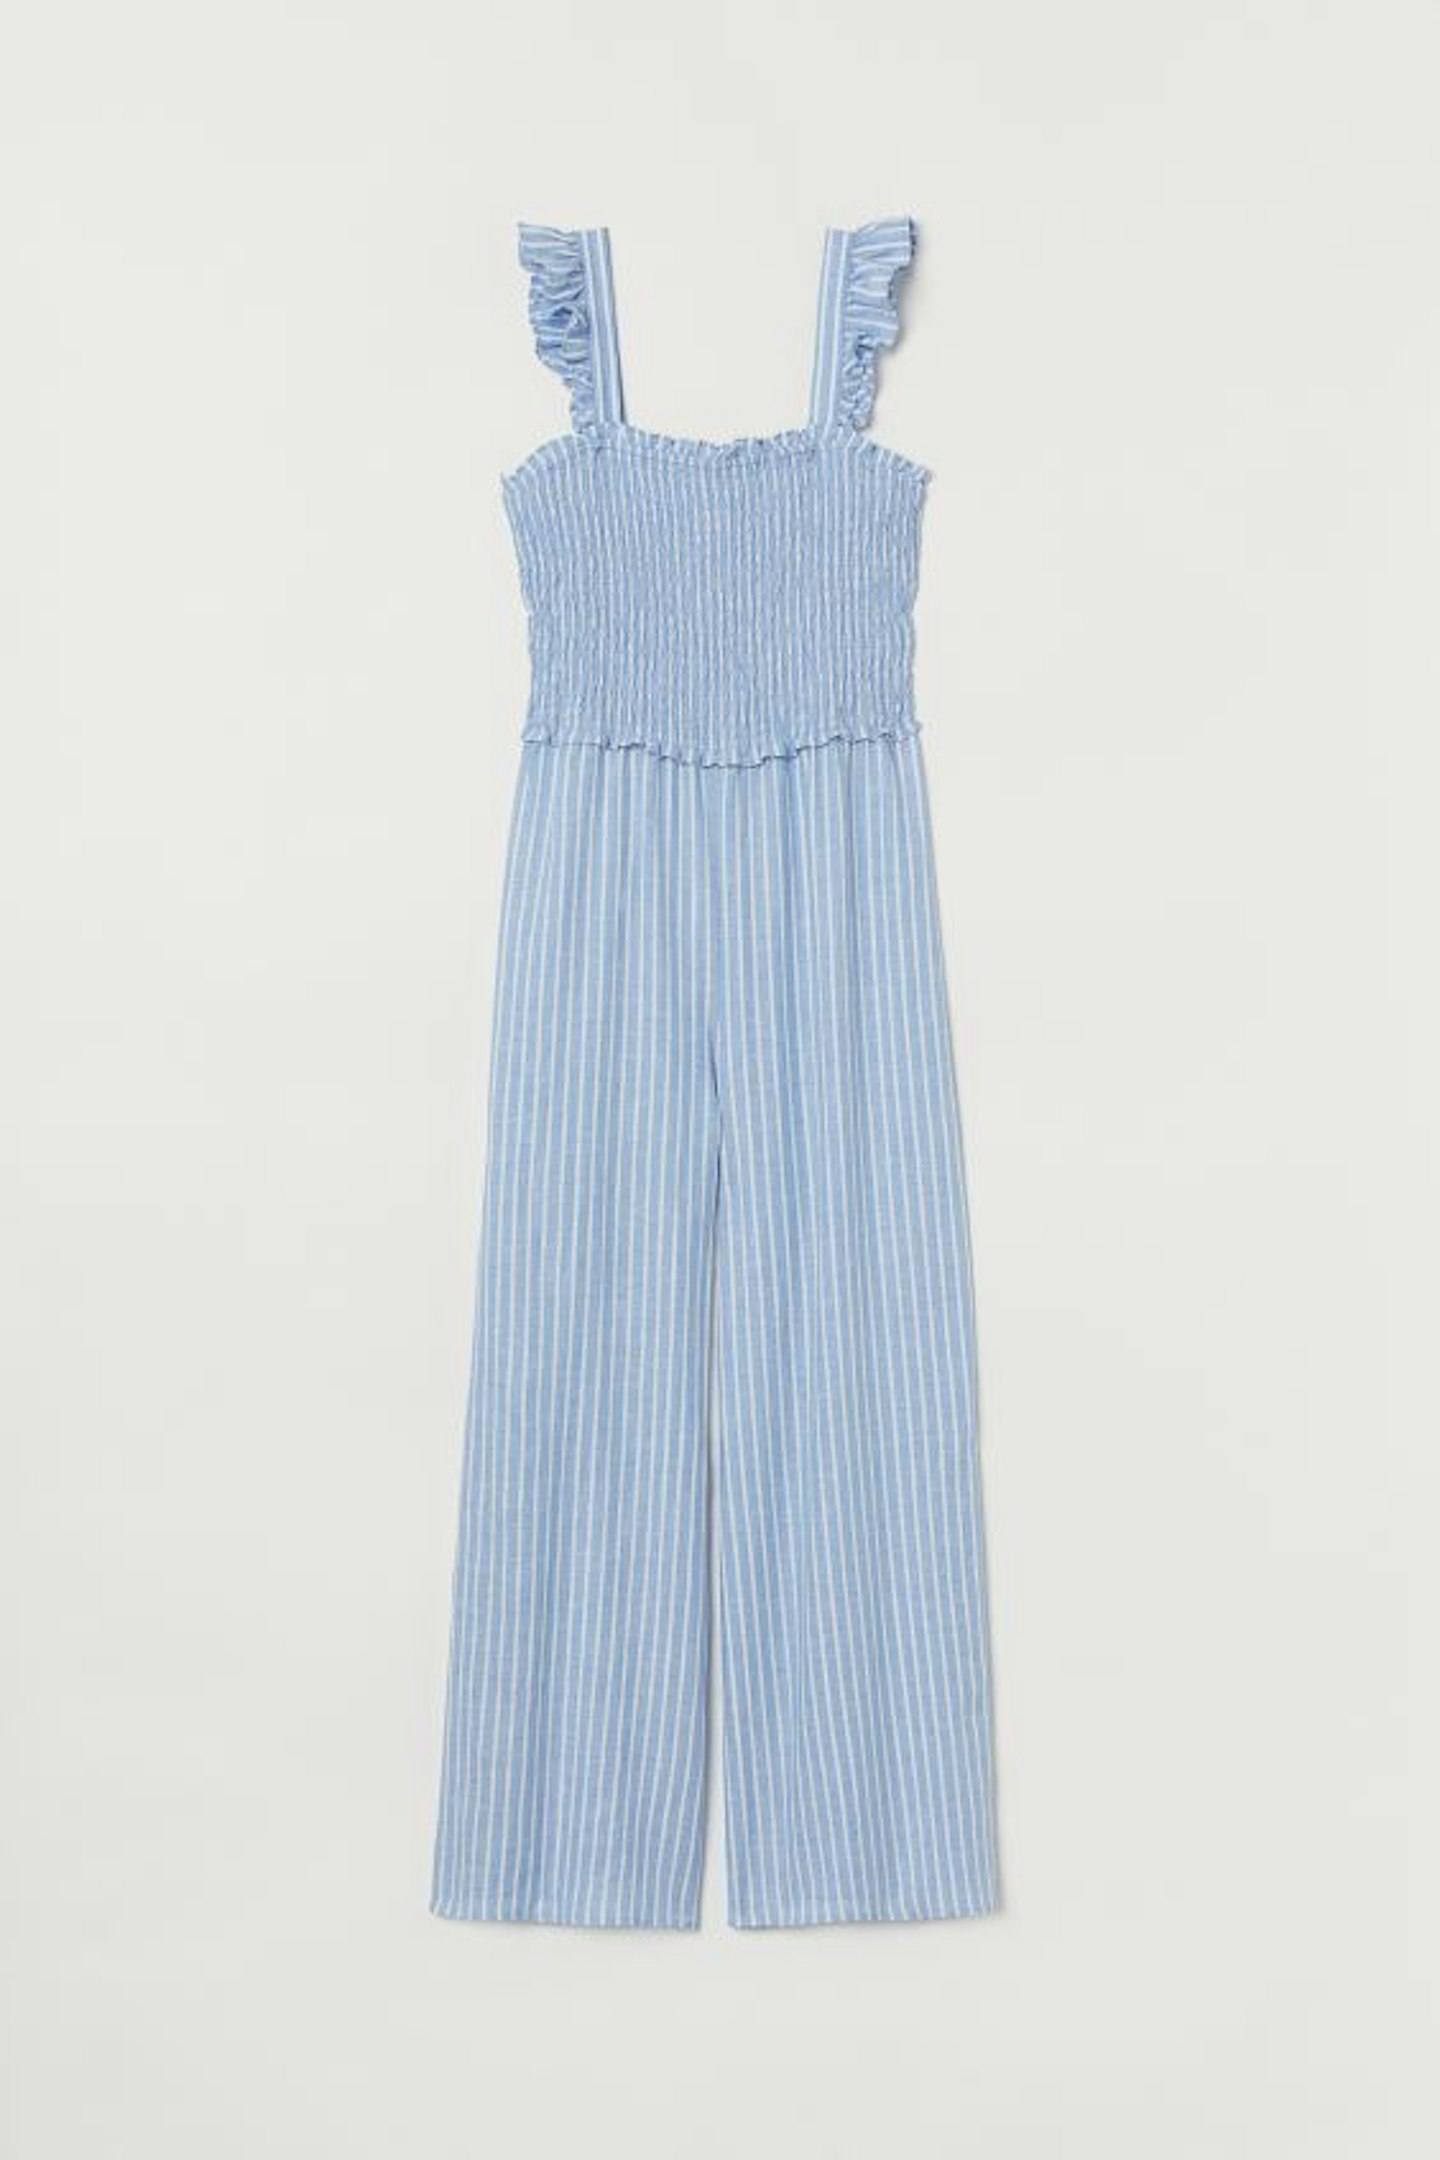 H&M, Smocked Jumpsuit, £34.99